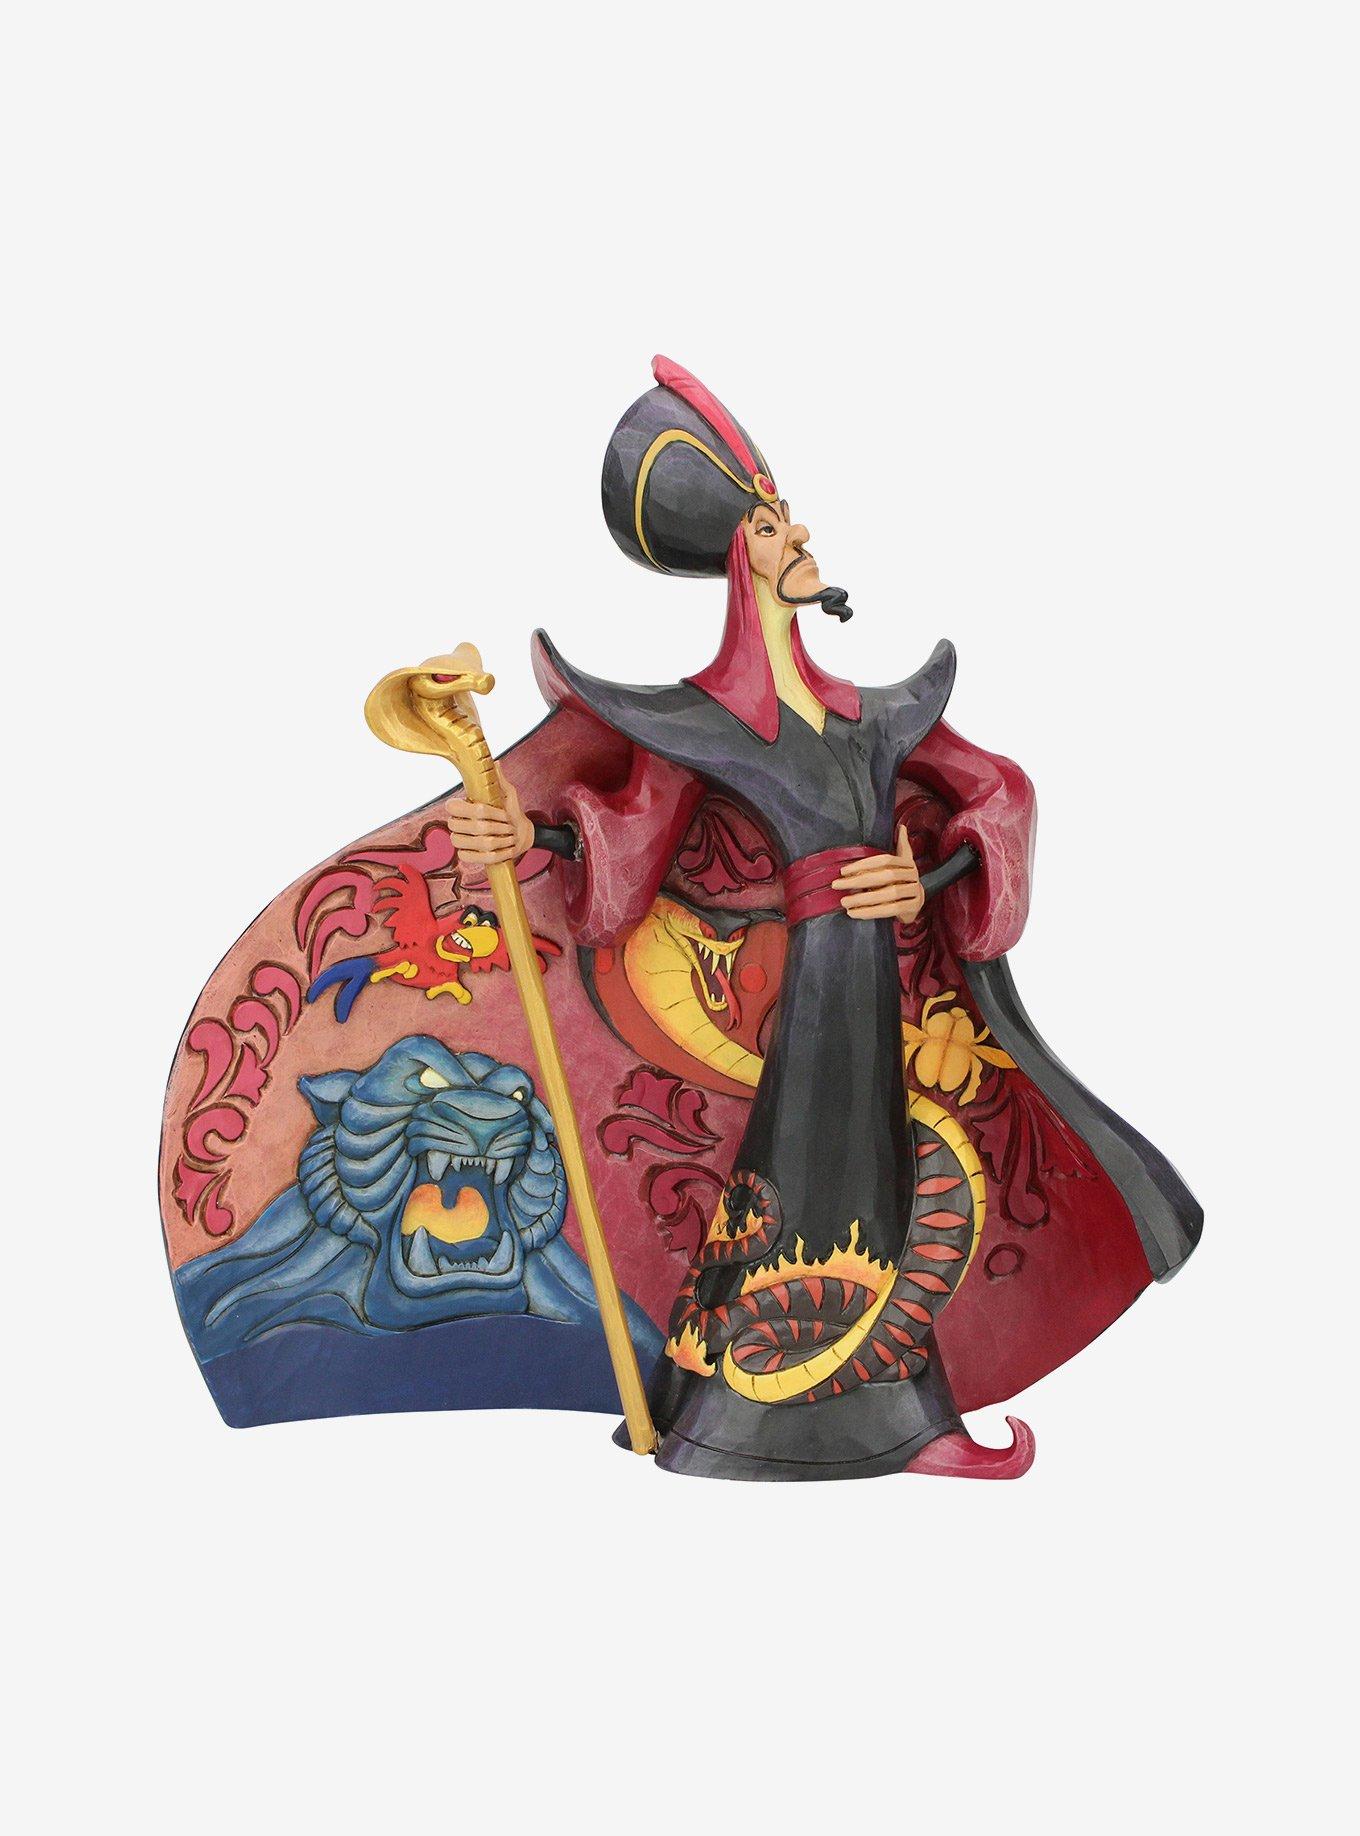 Hot Topic Disney Aladdin Jafar Figure